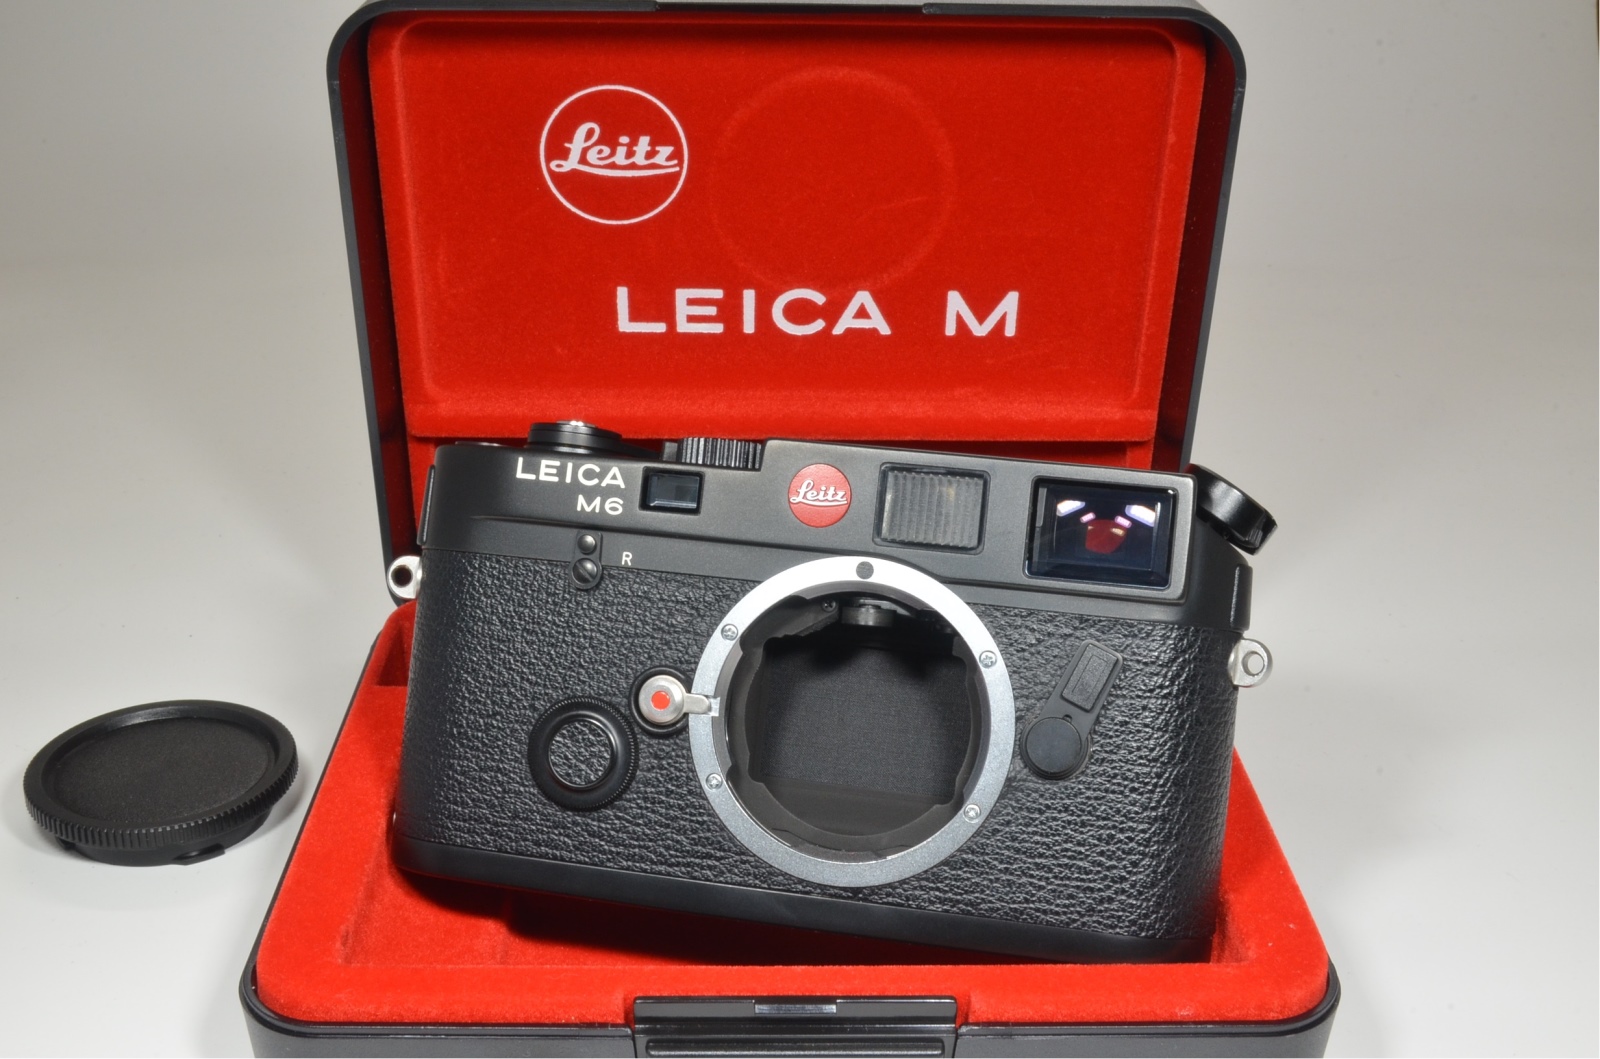 leica m6 0.72 black rangefinder in boxed serial no.1709679 year 1986